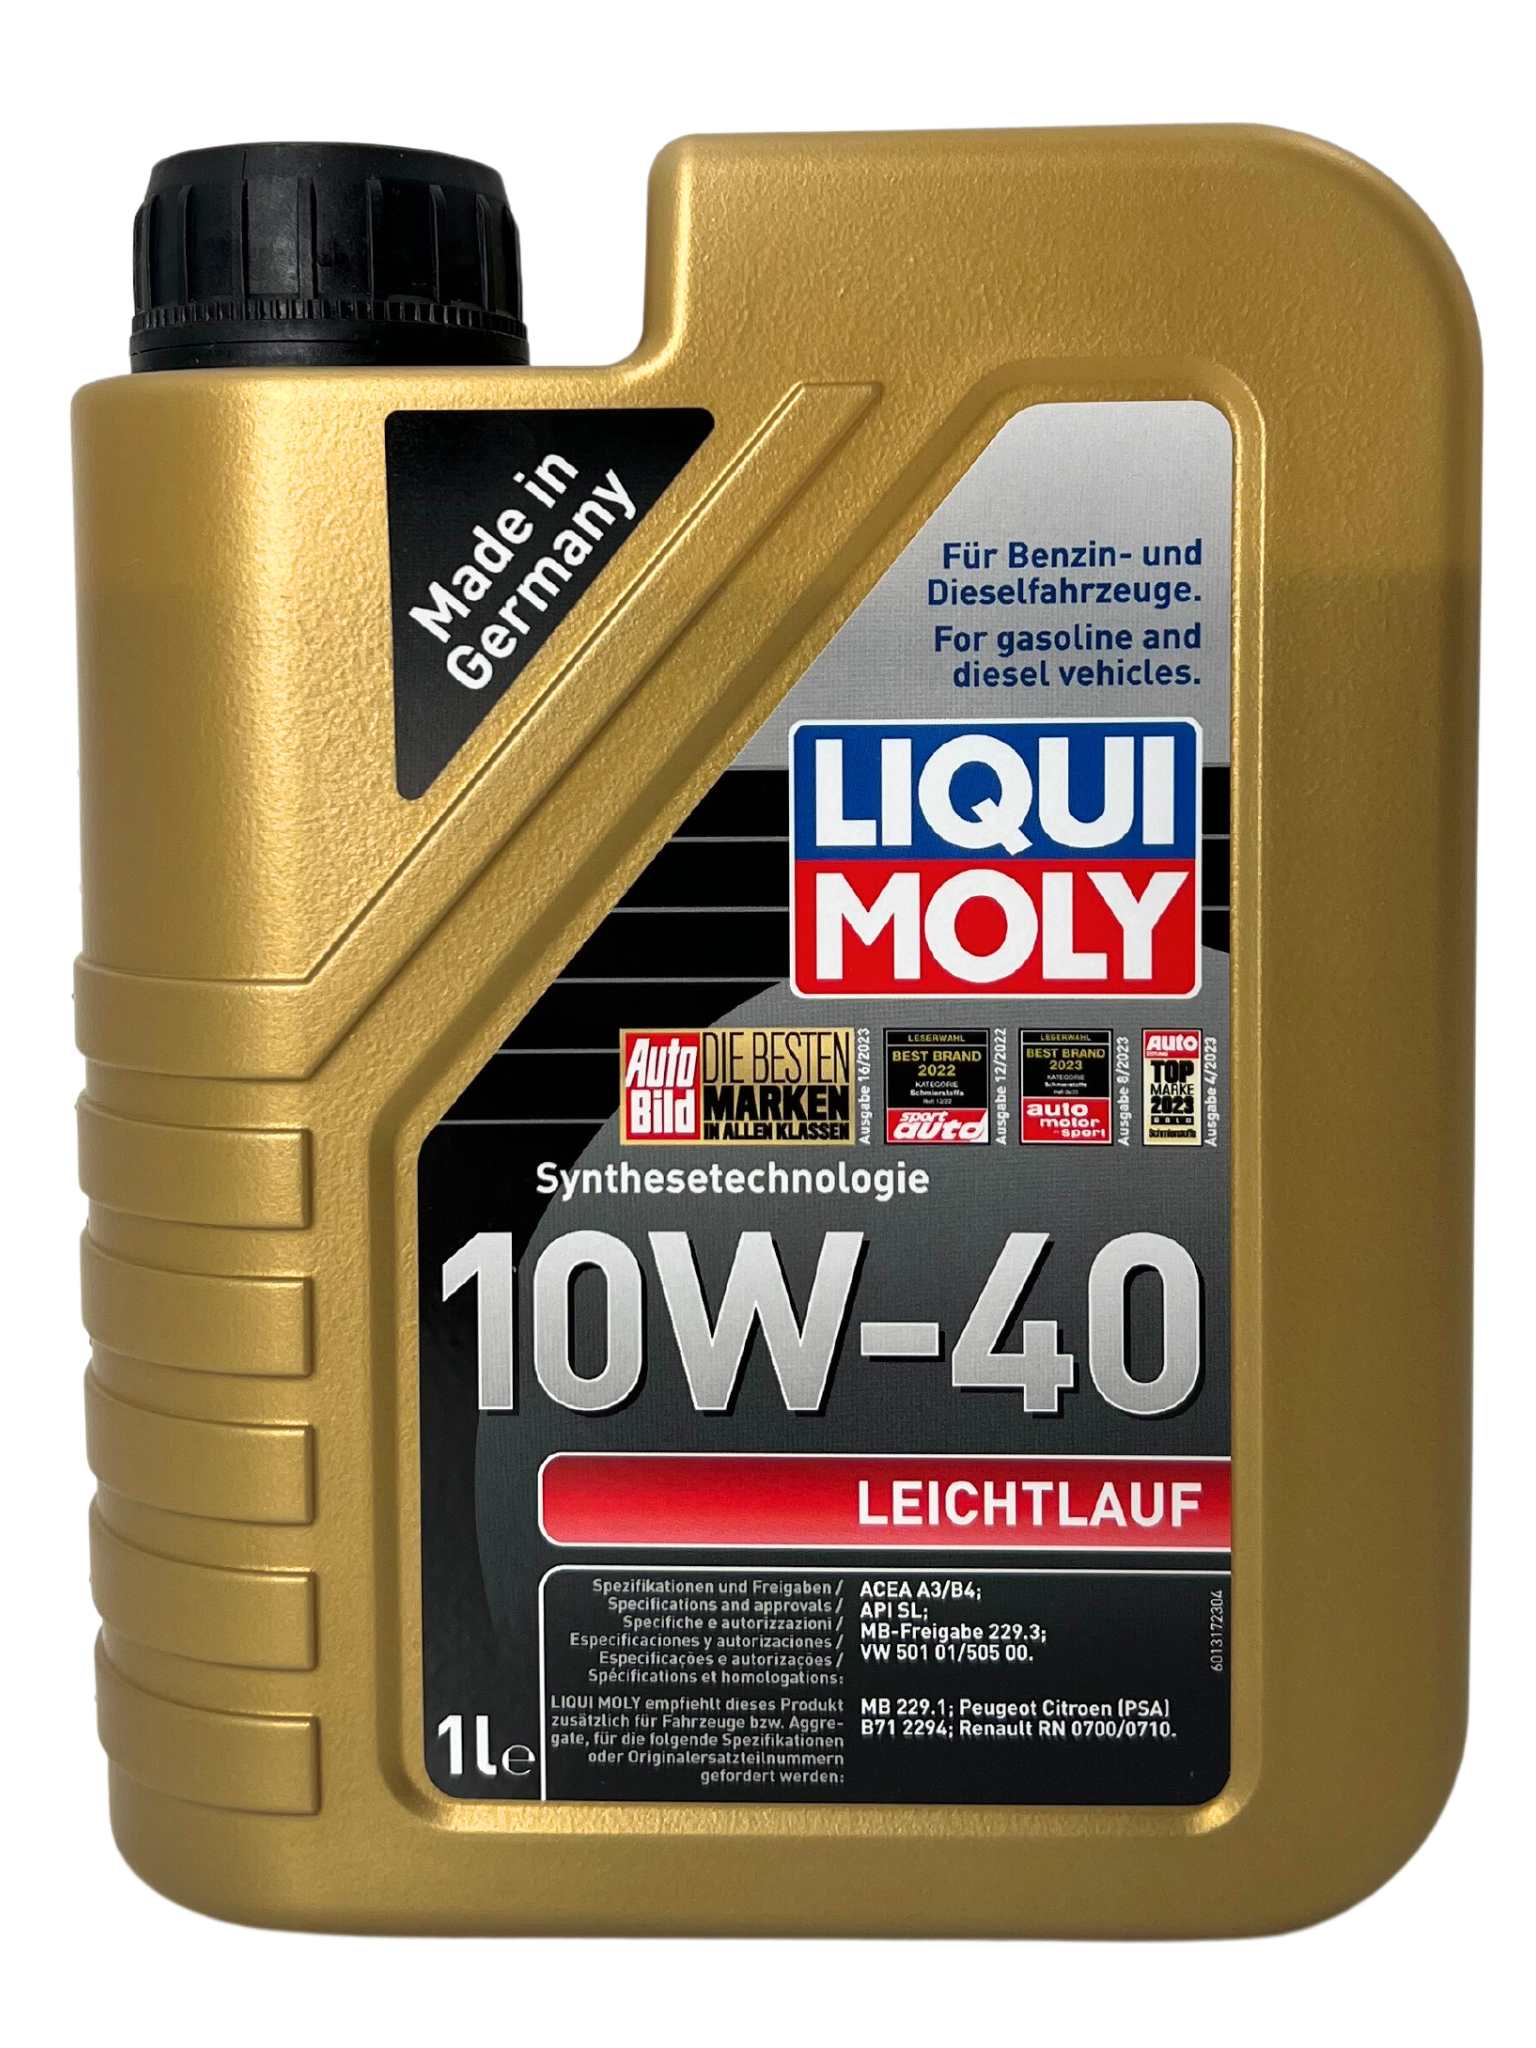 Liqui Moly Leichtlauf 10W-40 1 Liter